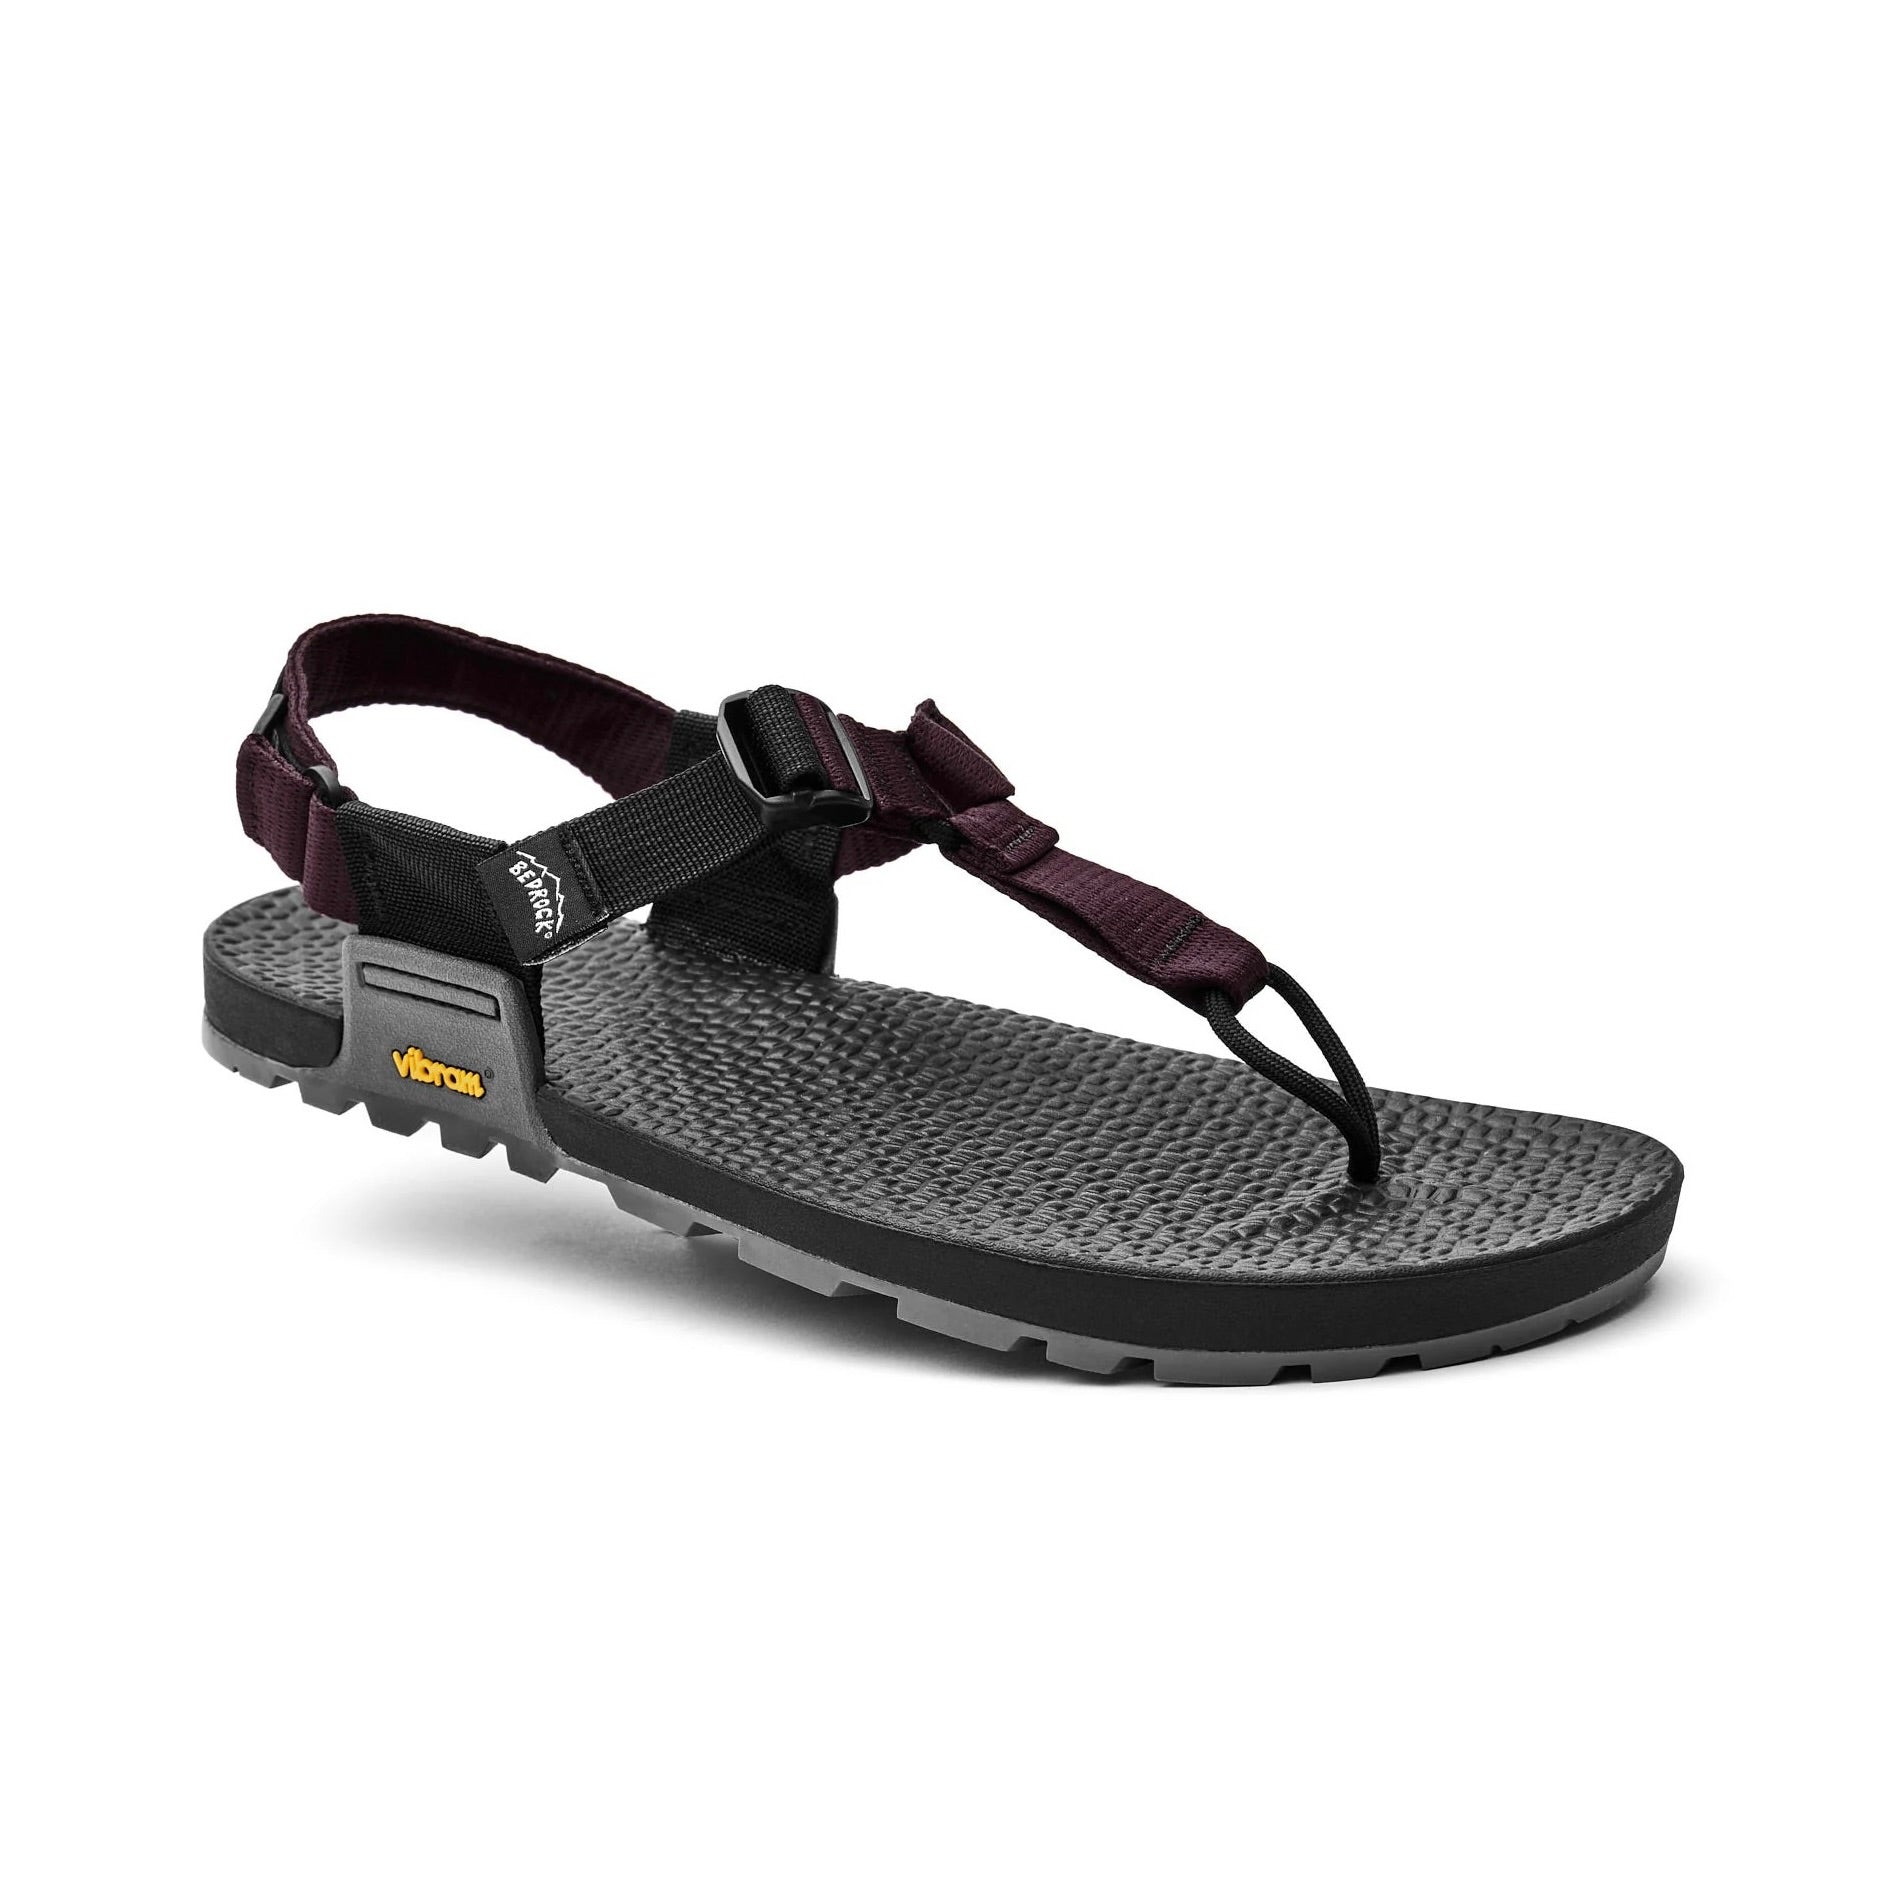 BEDROCK SANDALS Cairn Evo 3D Pro Sandals